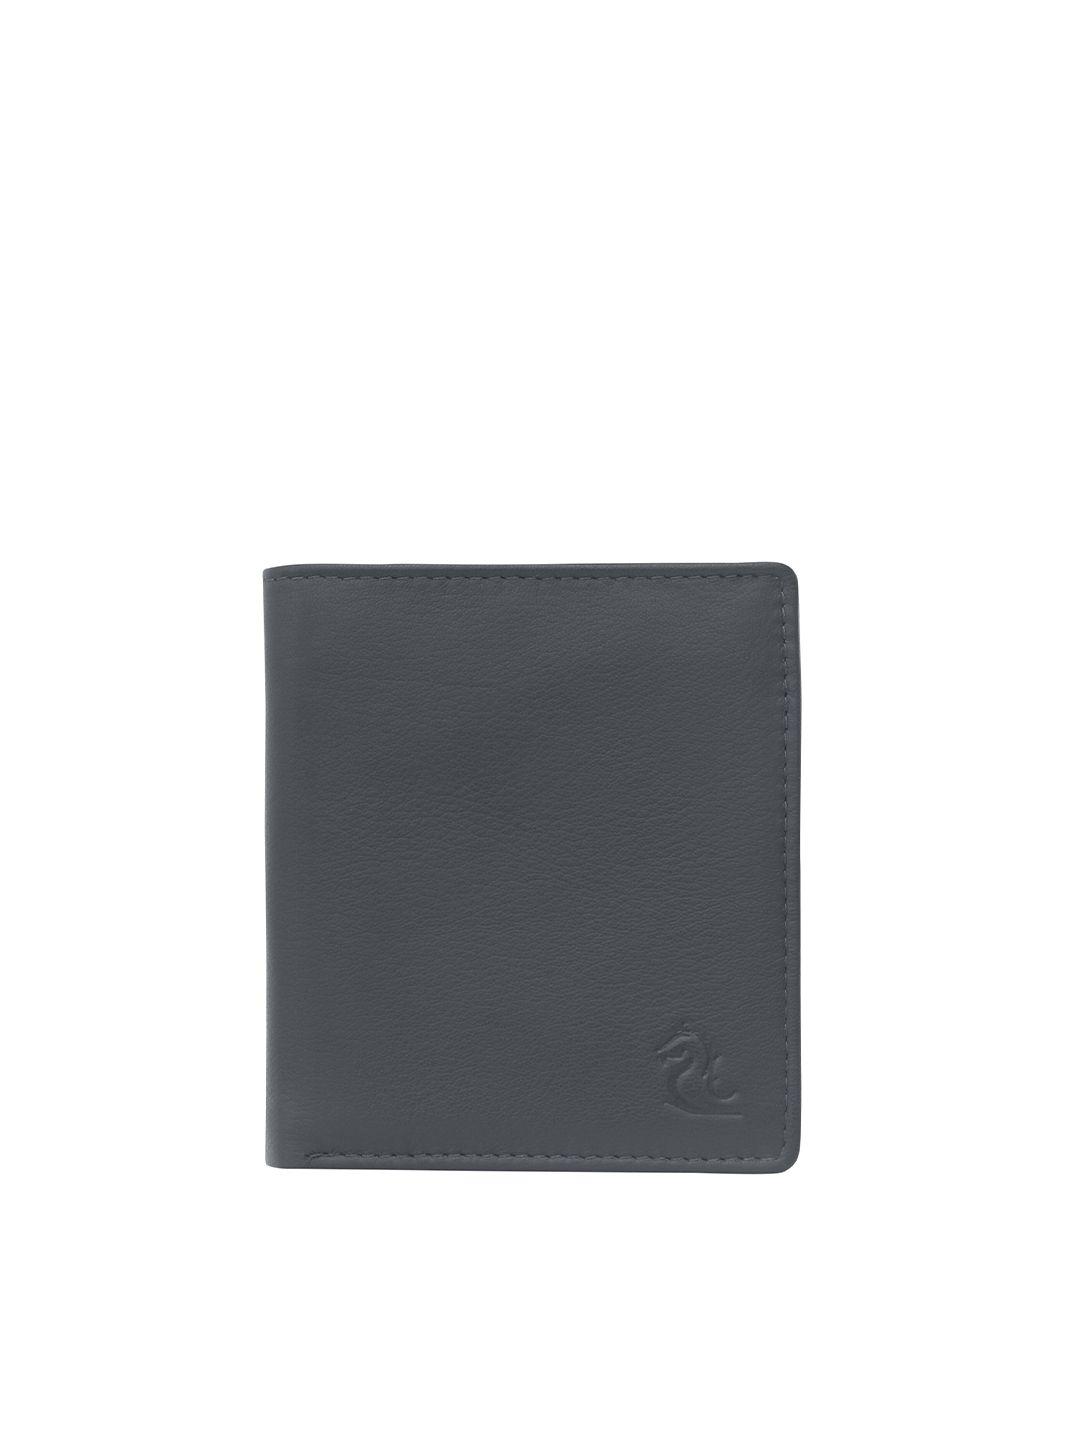 kara-men-leather-two-fold-wallet